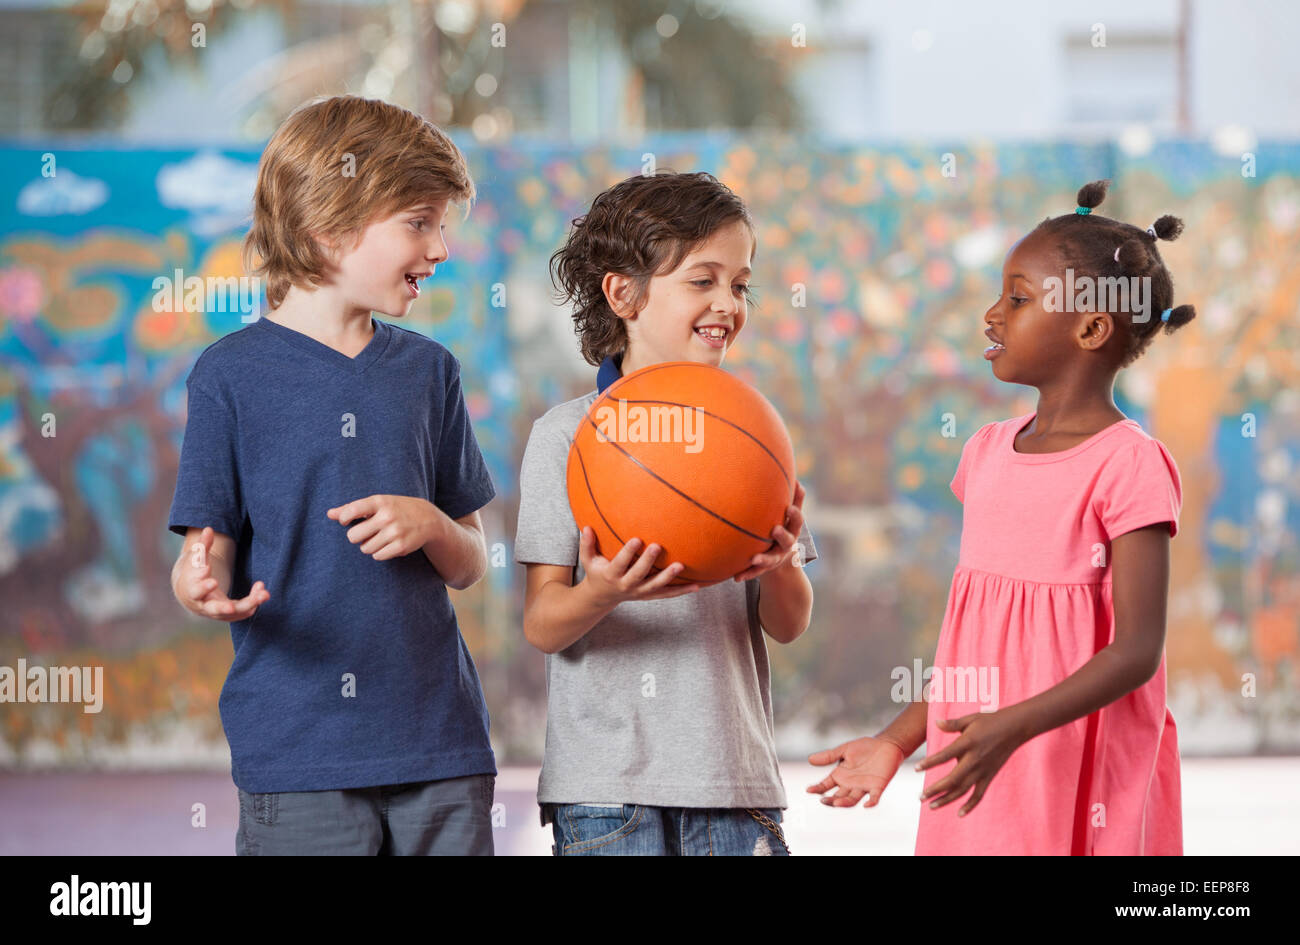 Smiling multi ethnic kids playing in schoolyard. Stock Photo